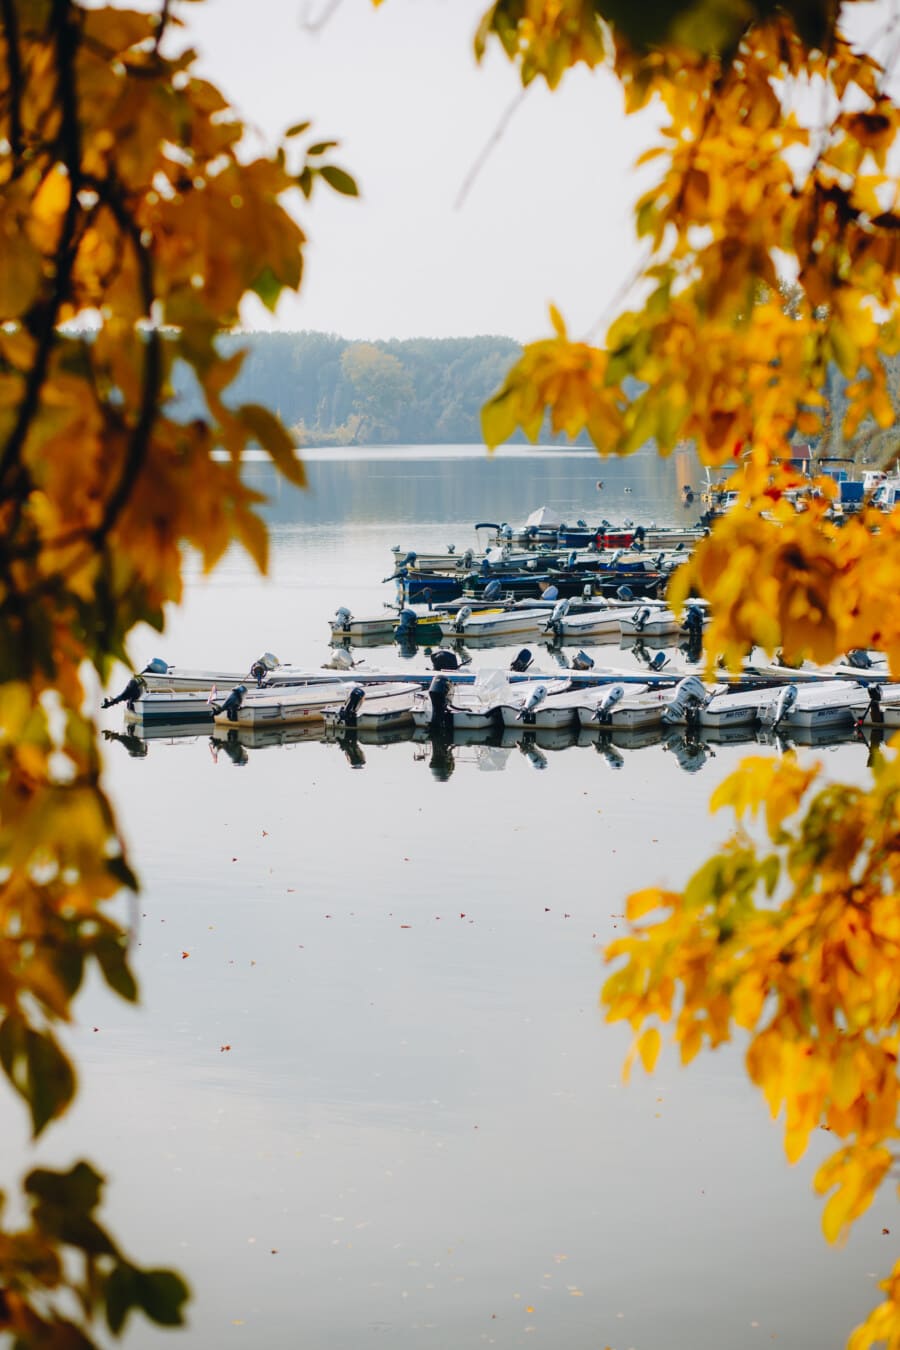 efterårssæsonen, ved søen, mole, bådene, gullig brun, grene, blade, natur, træ, efterår